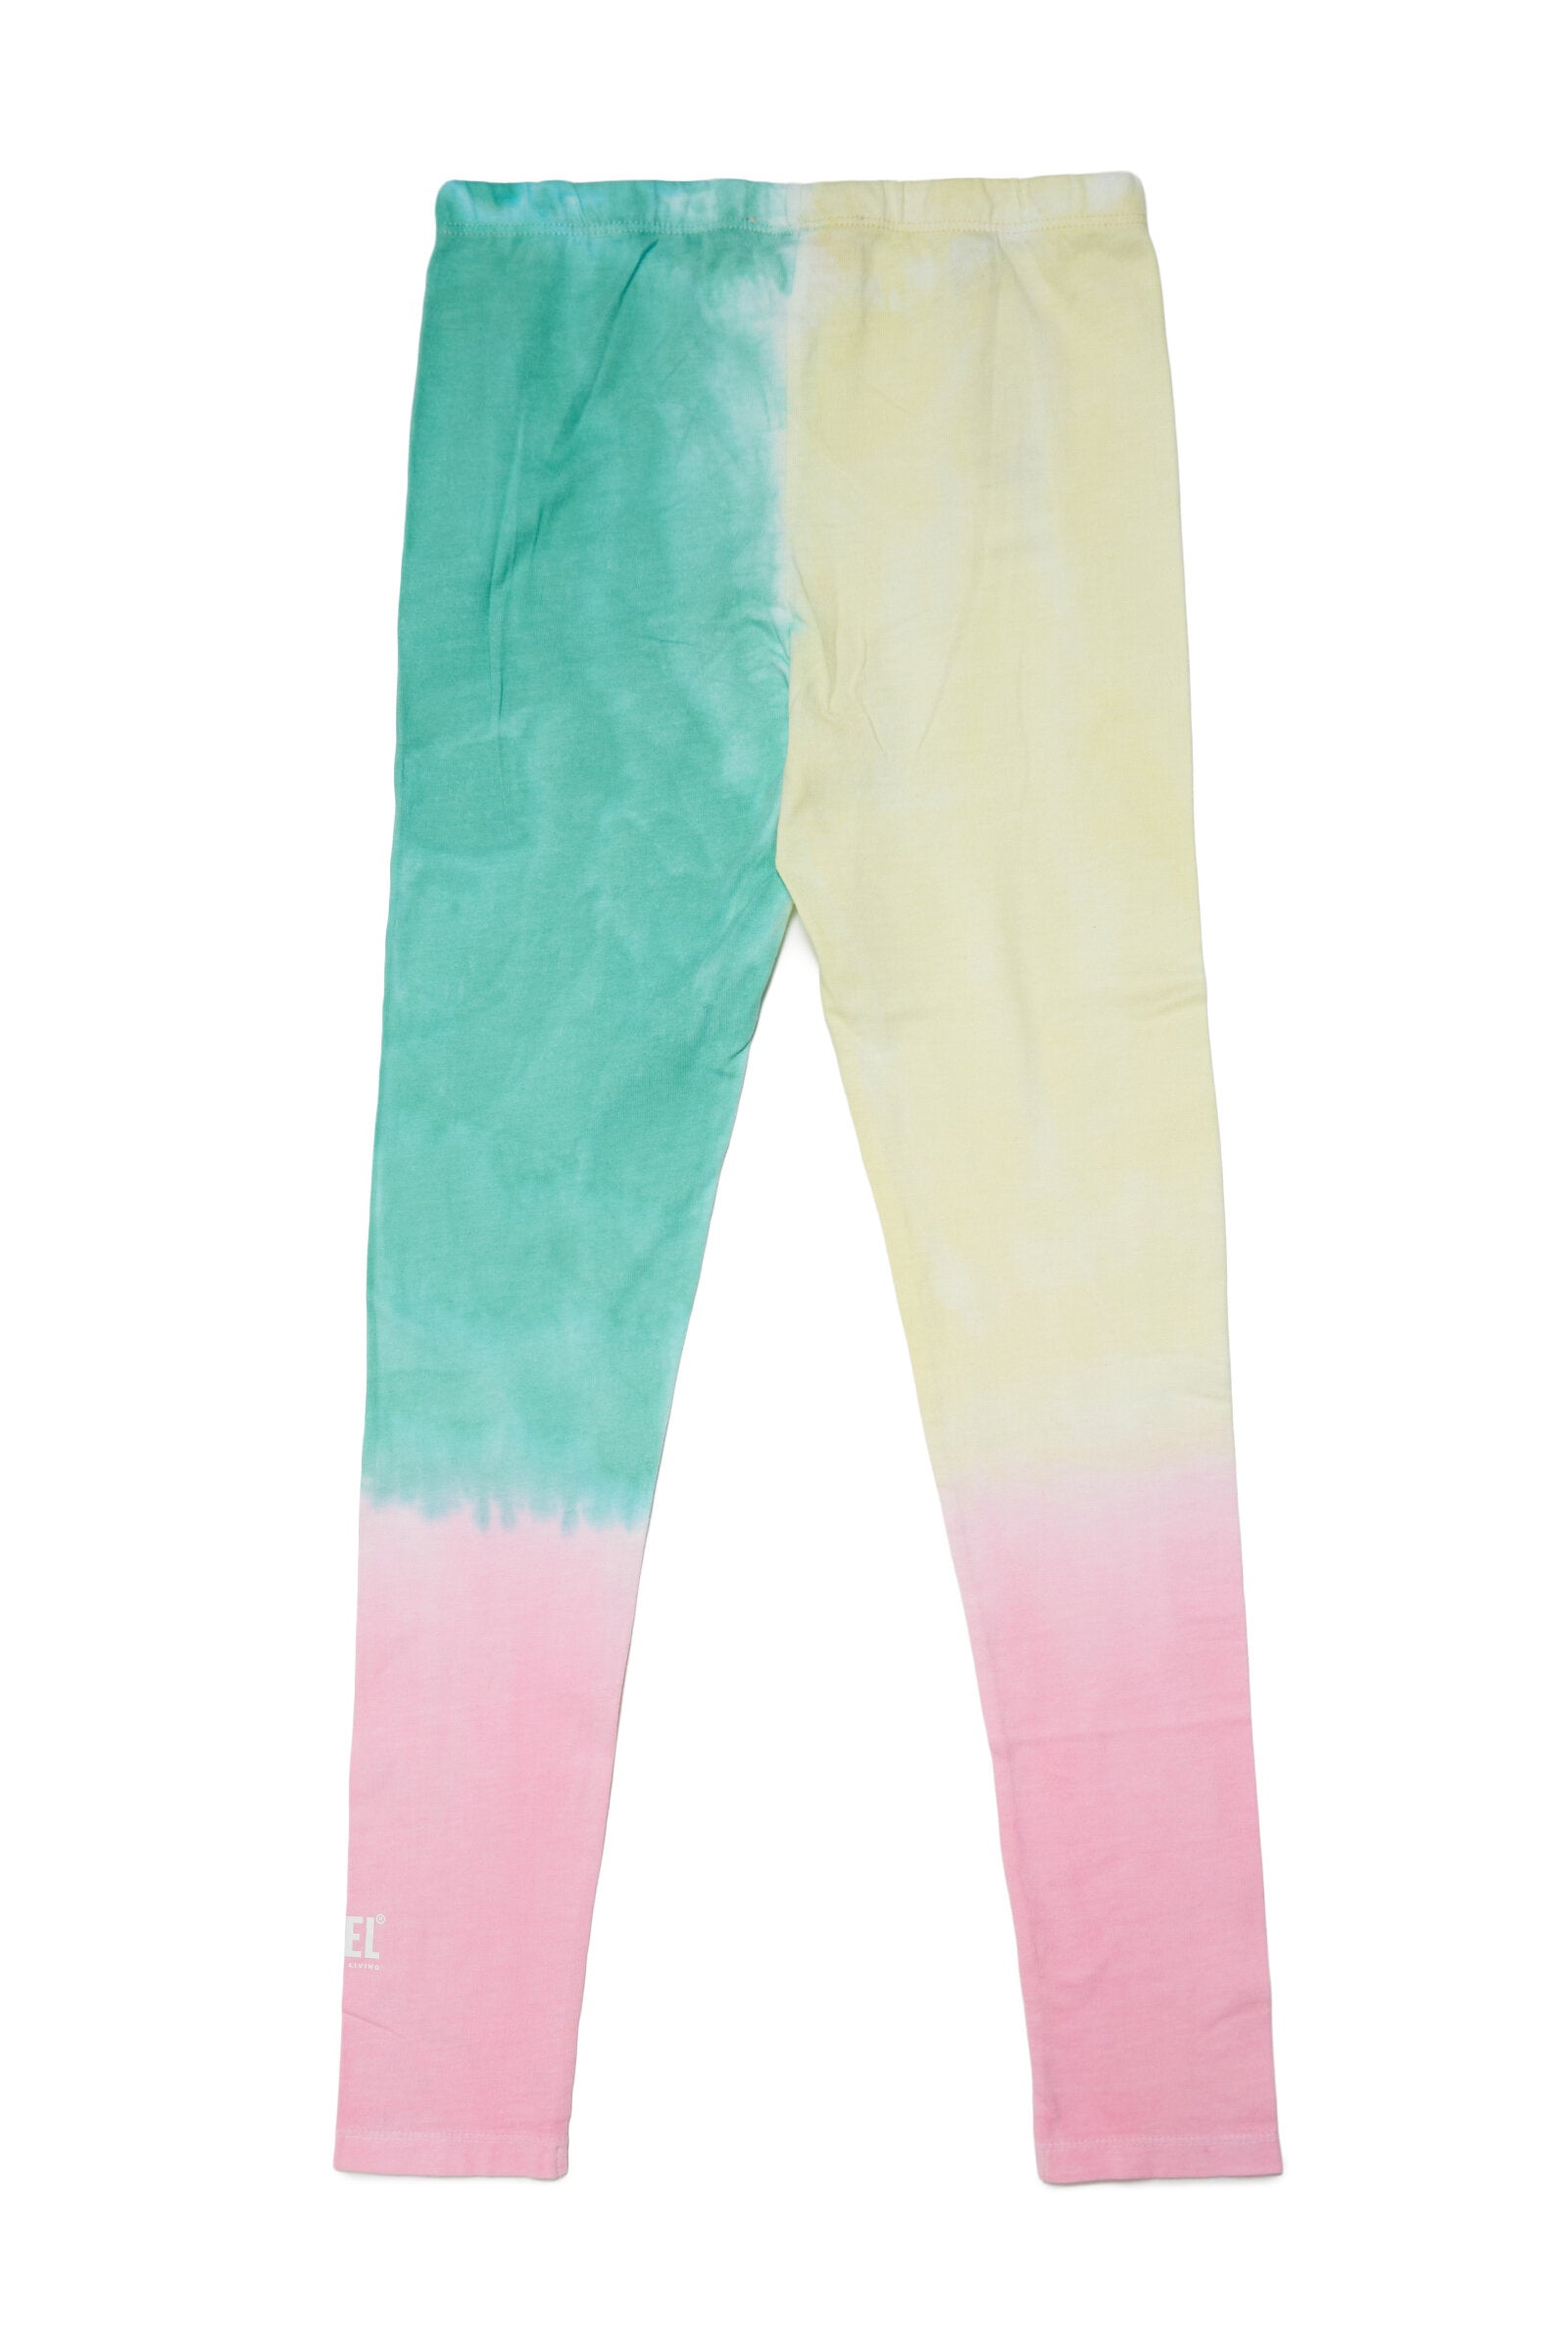 Leggings pants with multicolor treatment